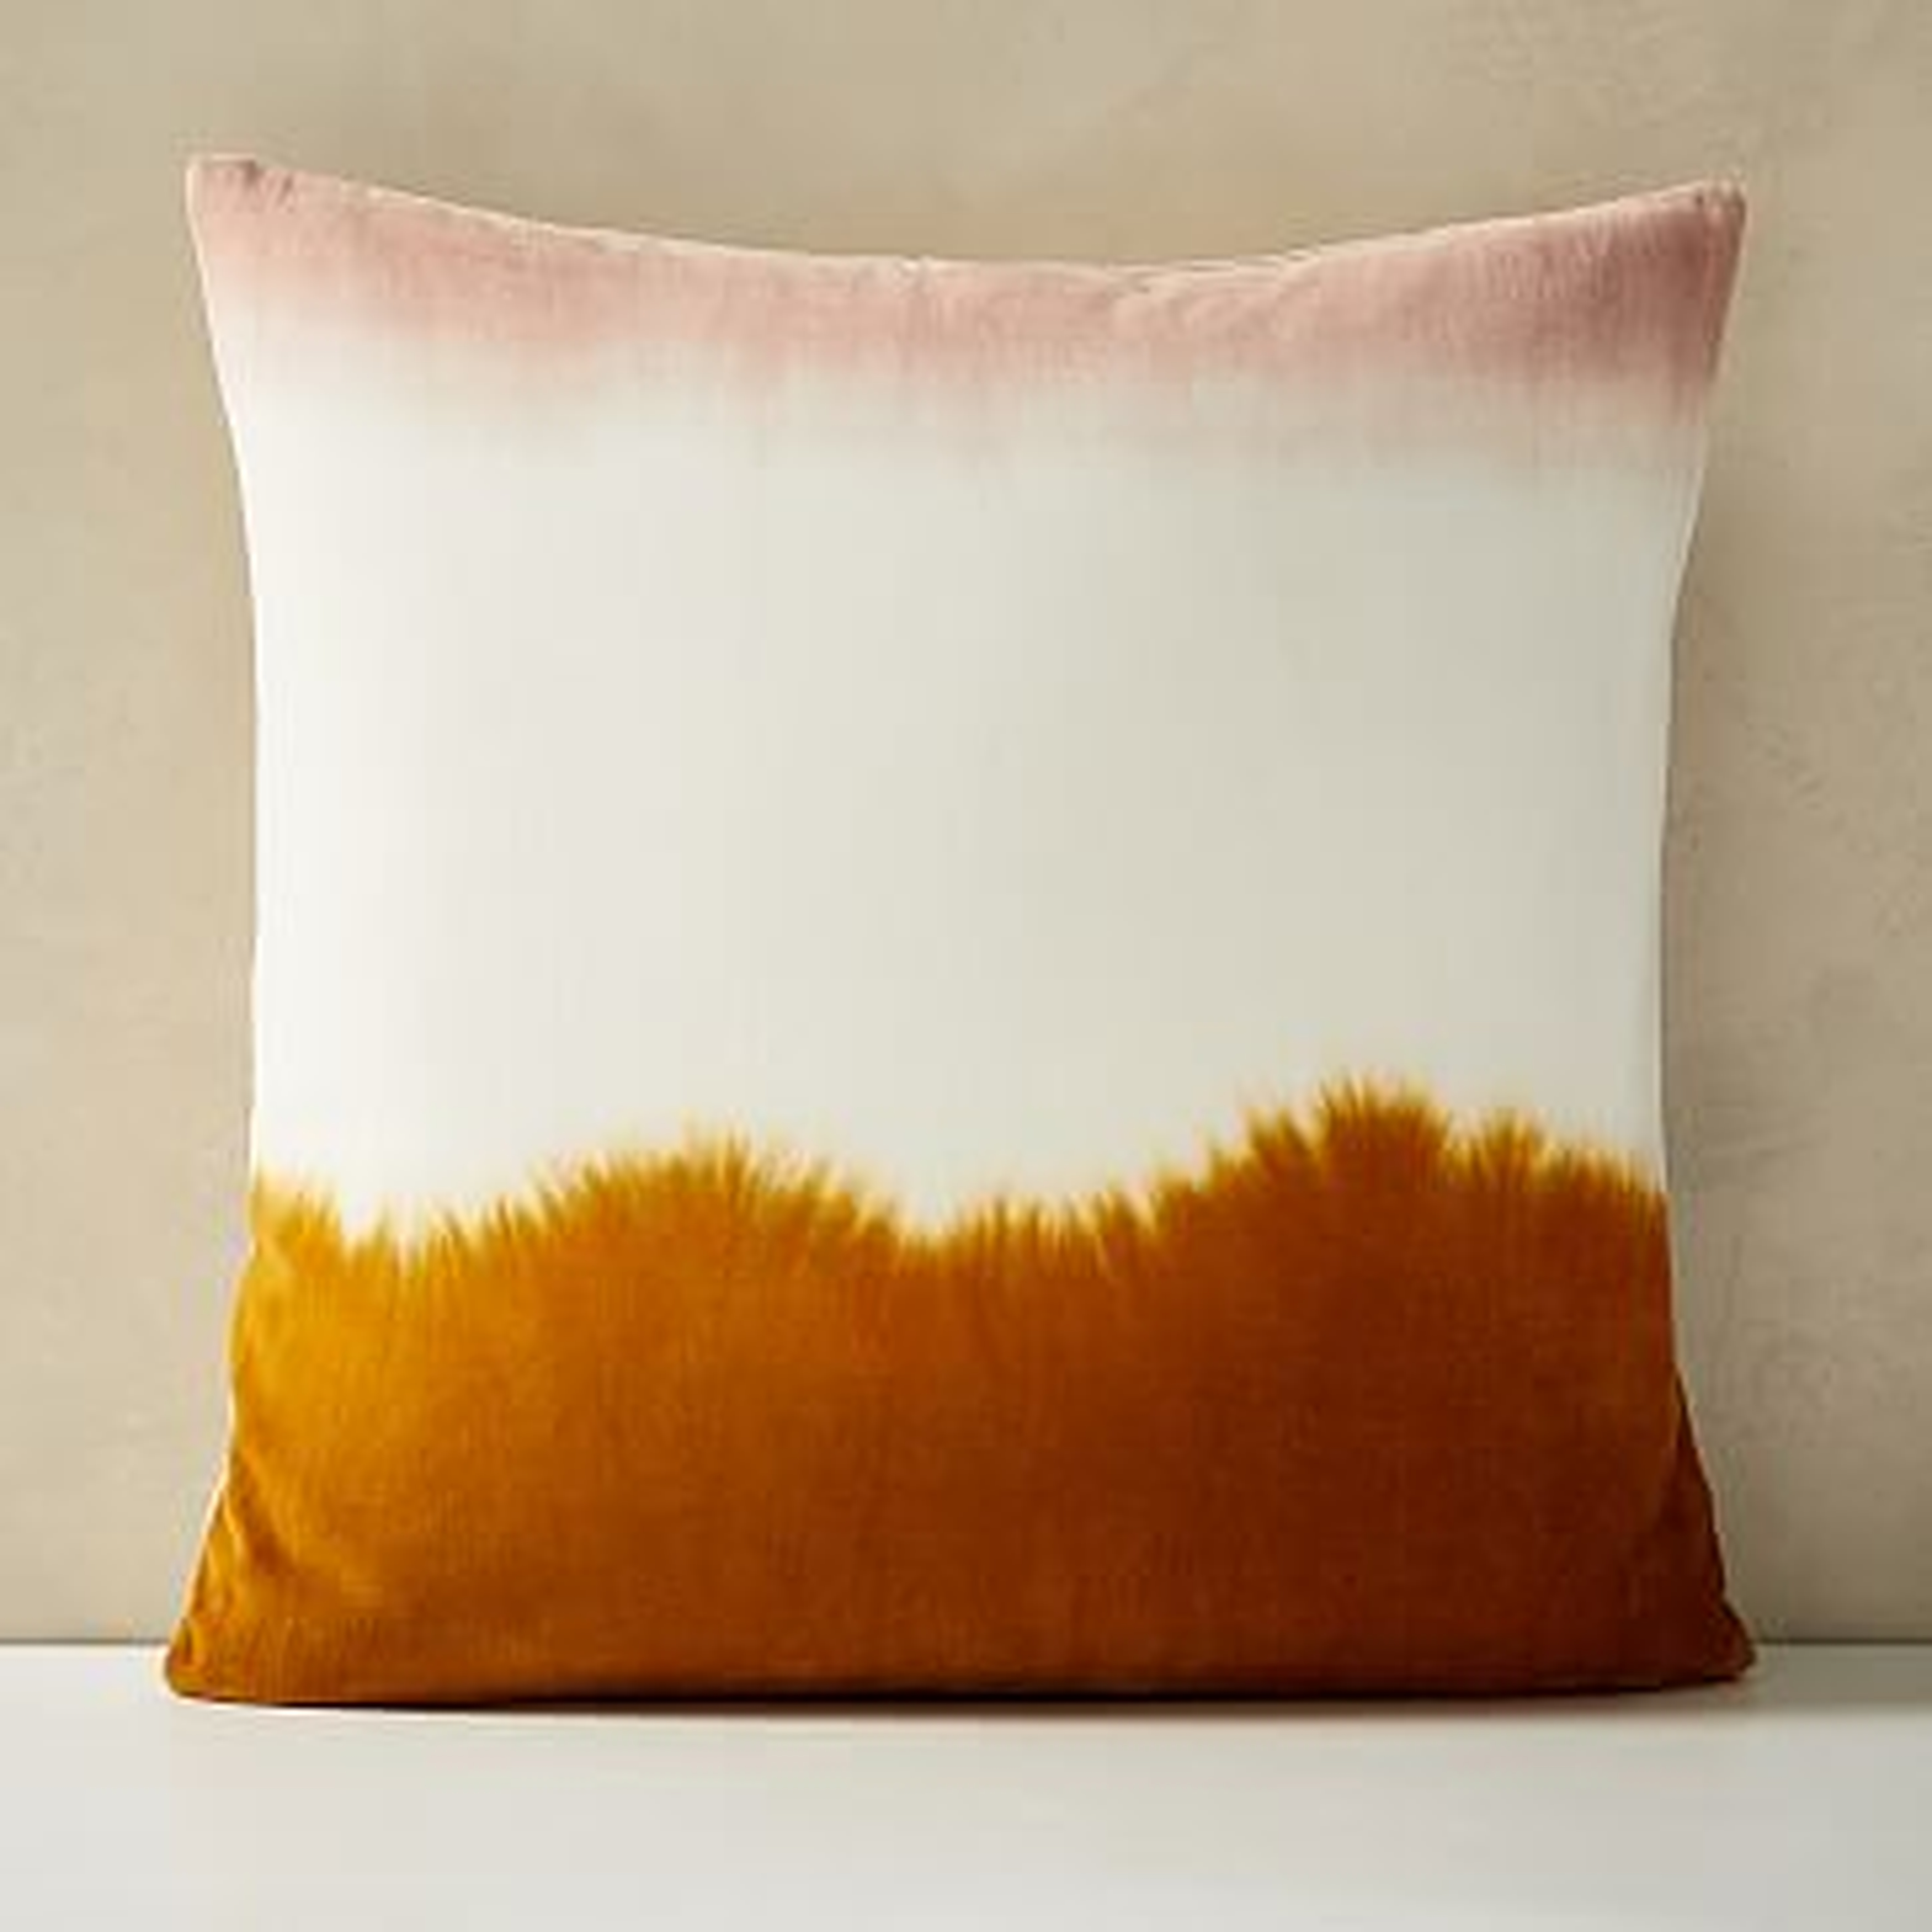 Dip Dye Pillow Cover, 20"x20", Rustic Orange - West Elm